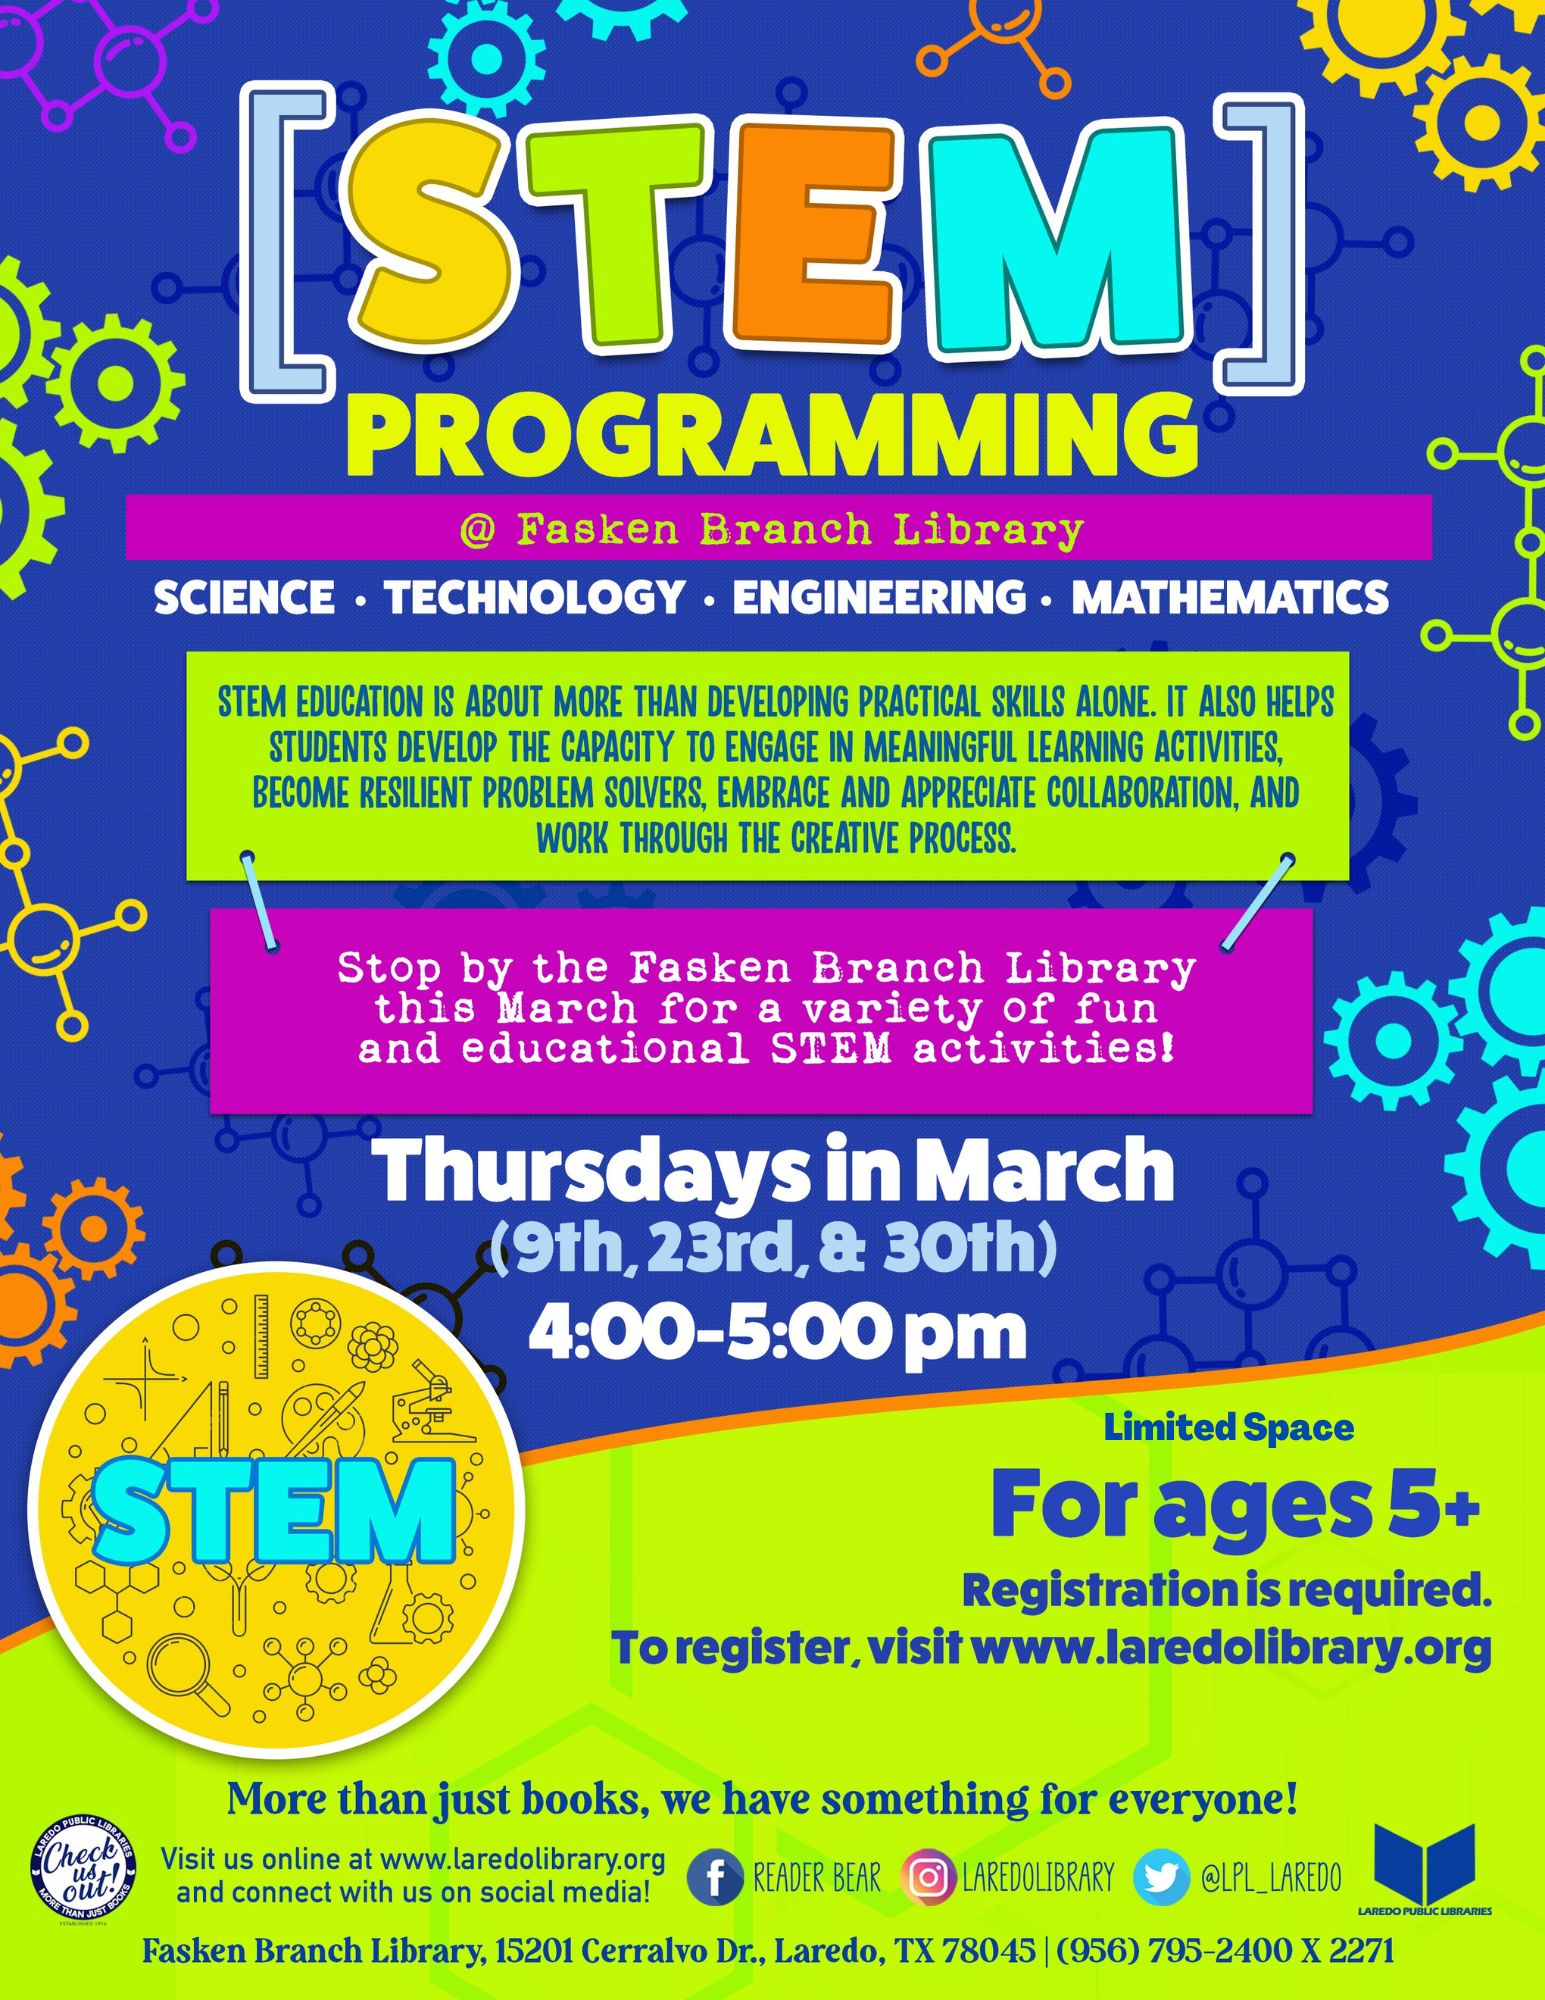 STEM Programming Registration Begins!